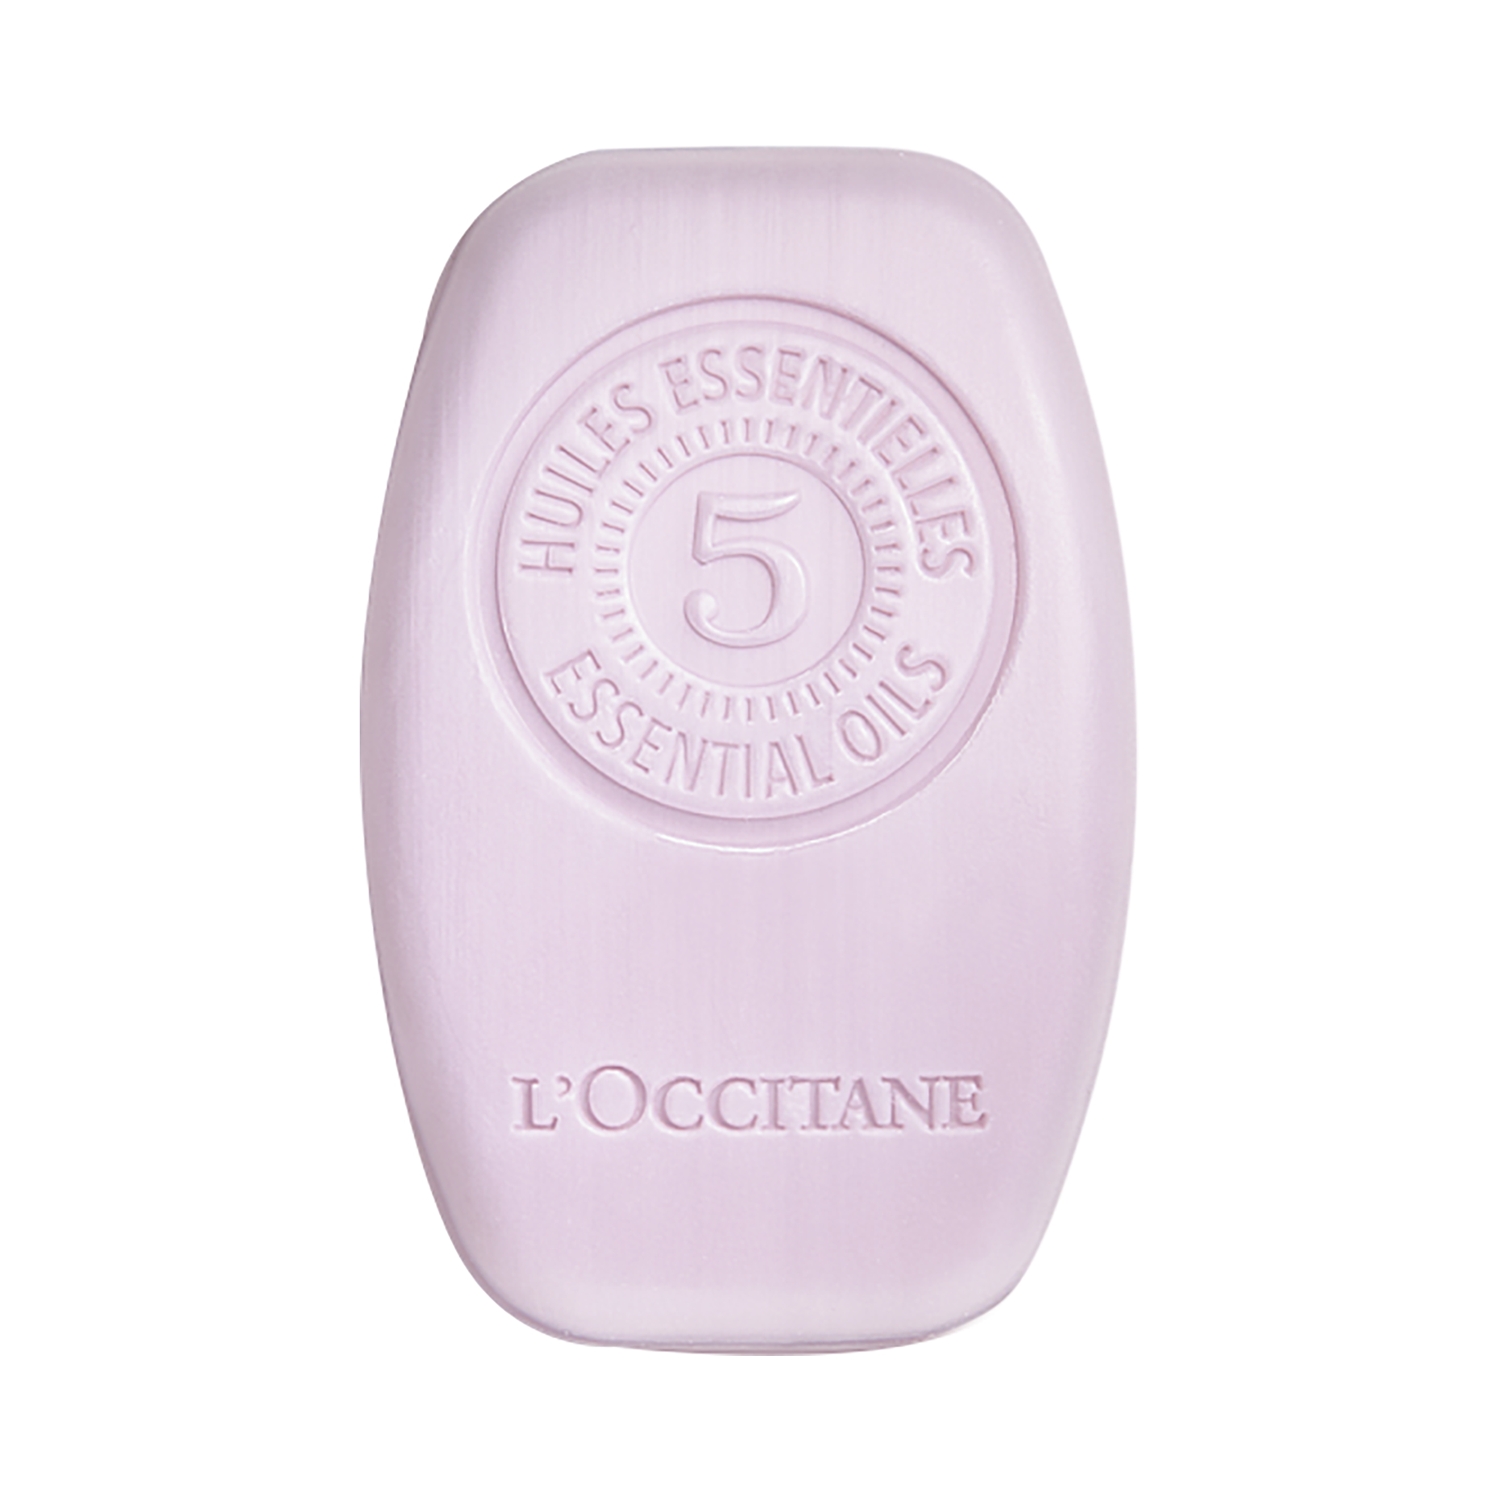 L'occitane | L'occitane 5 Essential Oils Gentle & Balance Solid Shampoo (60g)